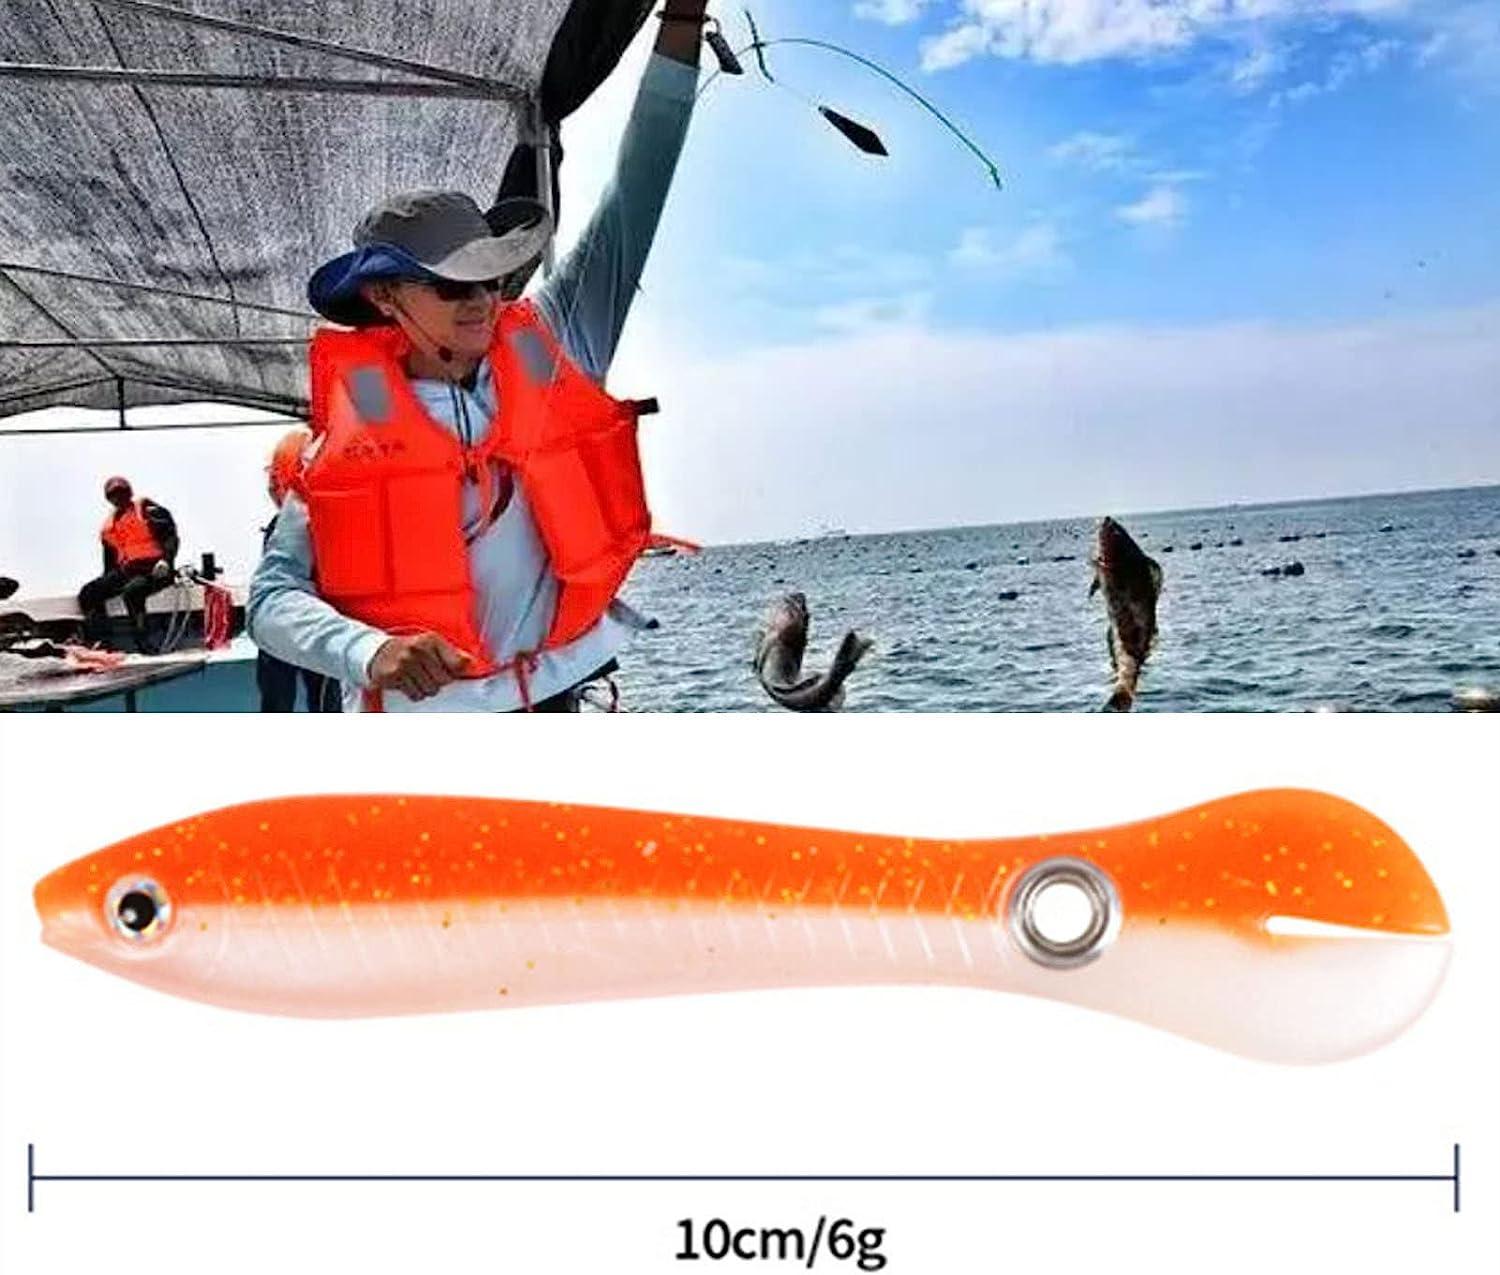  Soft Bionic Fishing Lure, Soft Plastic Fishing Lures